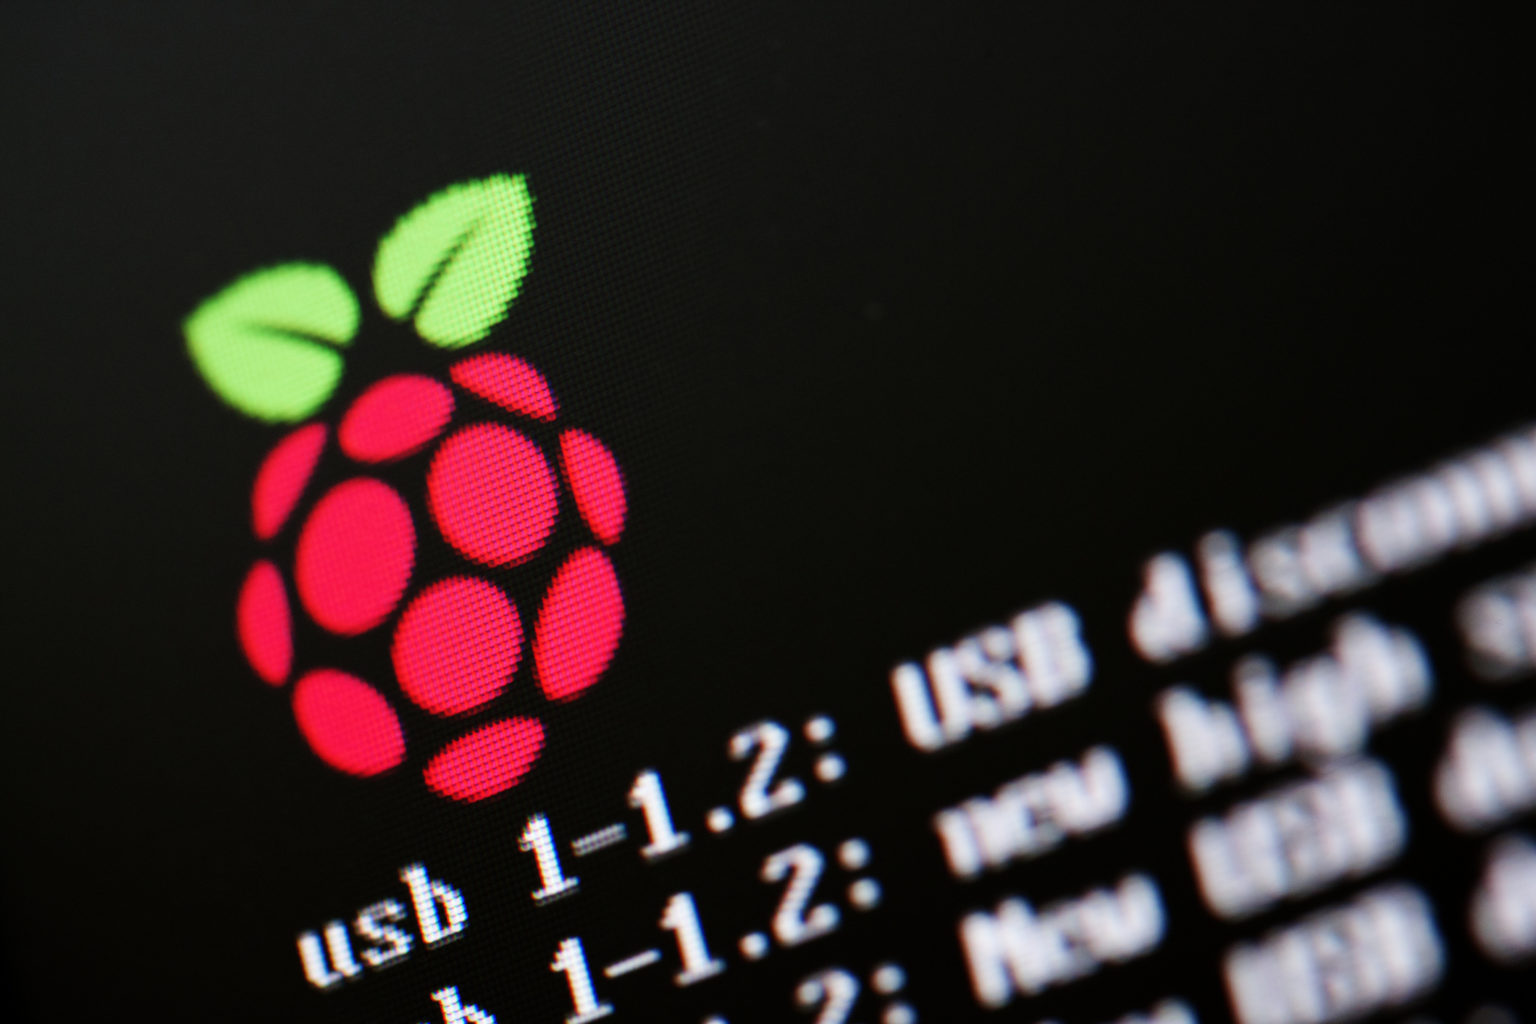 Generating public key raspberry pi 1